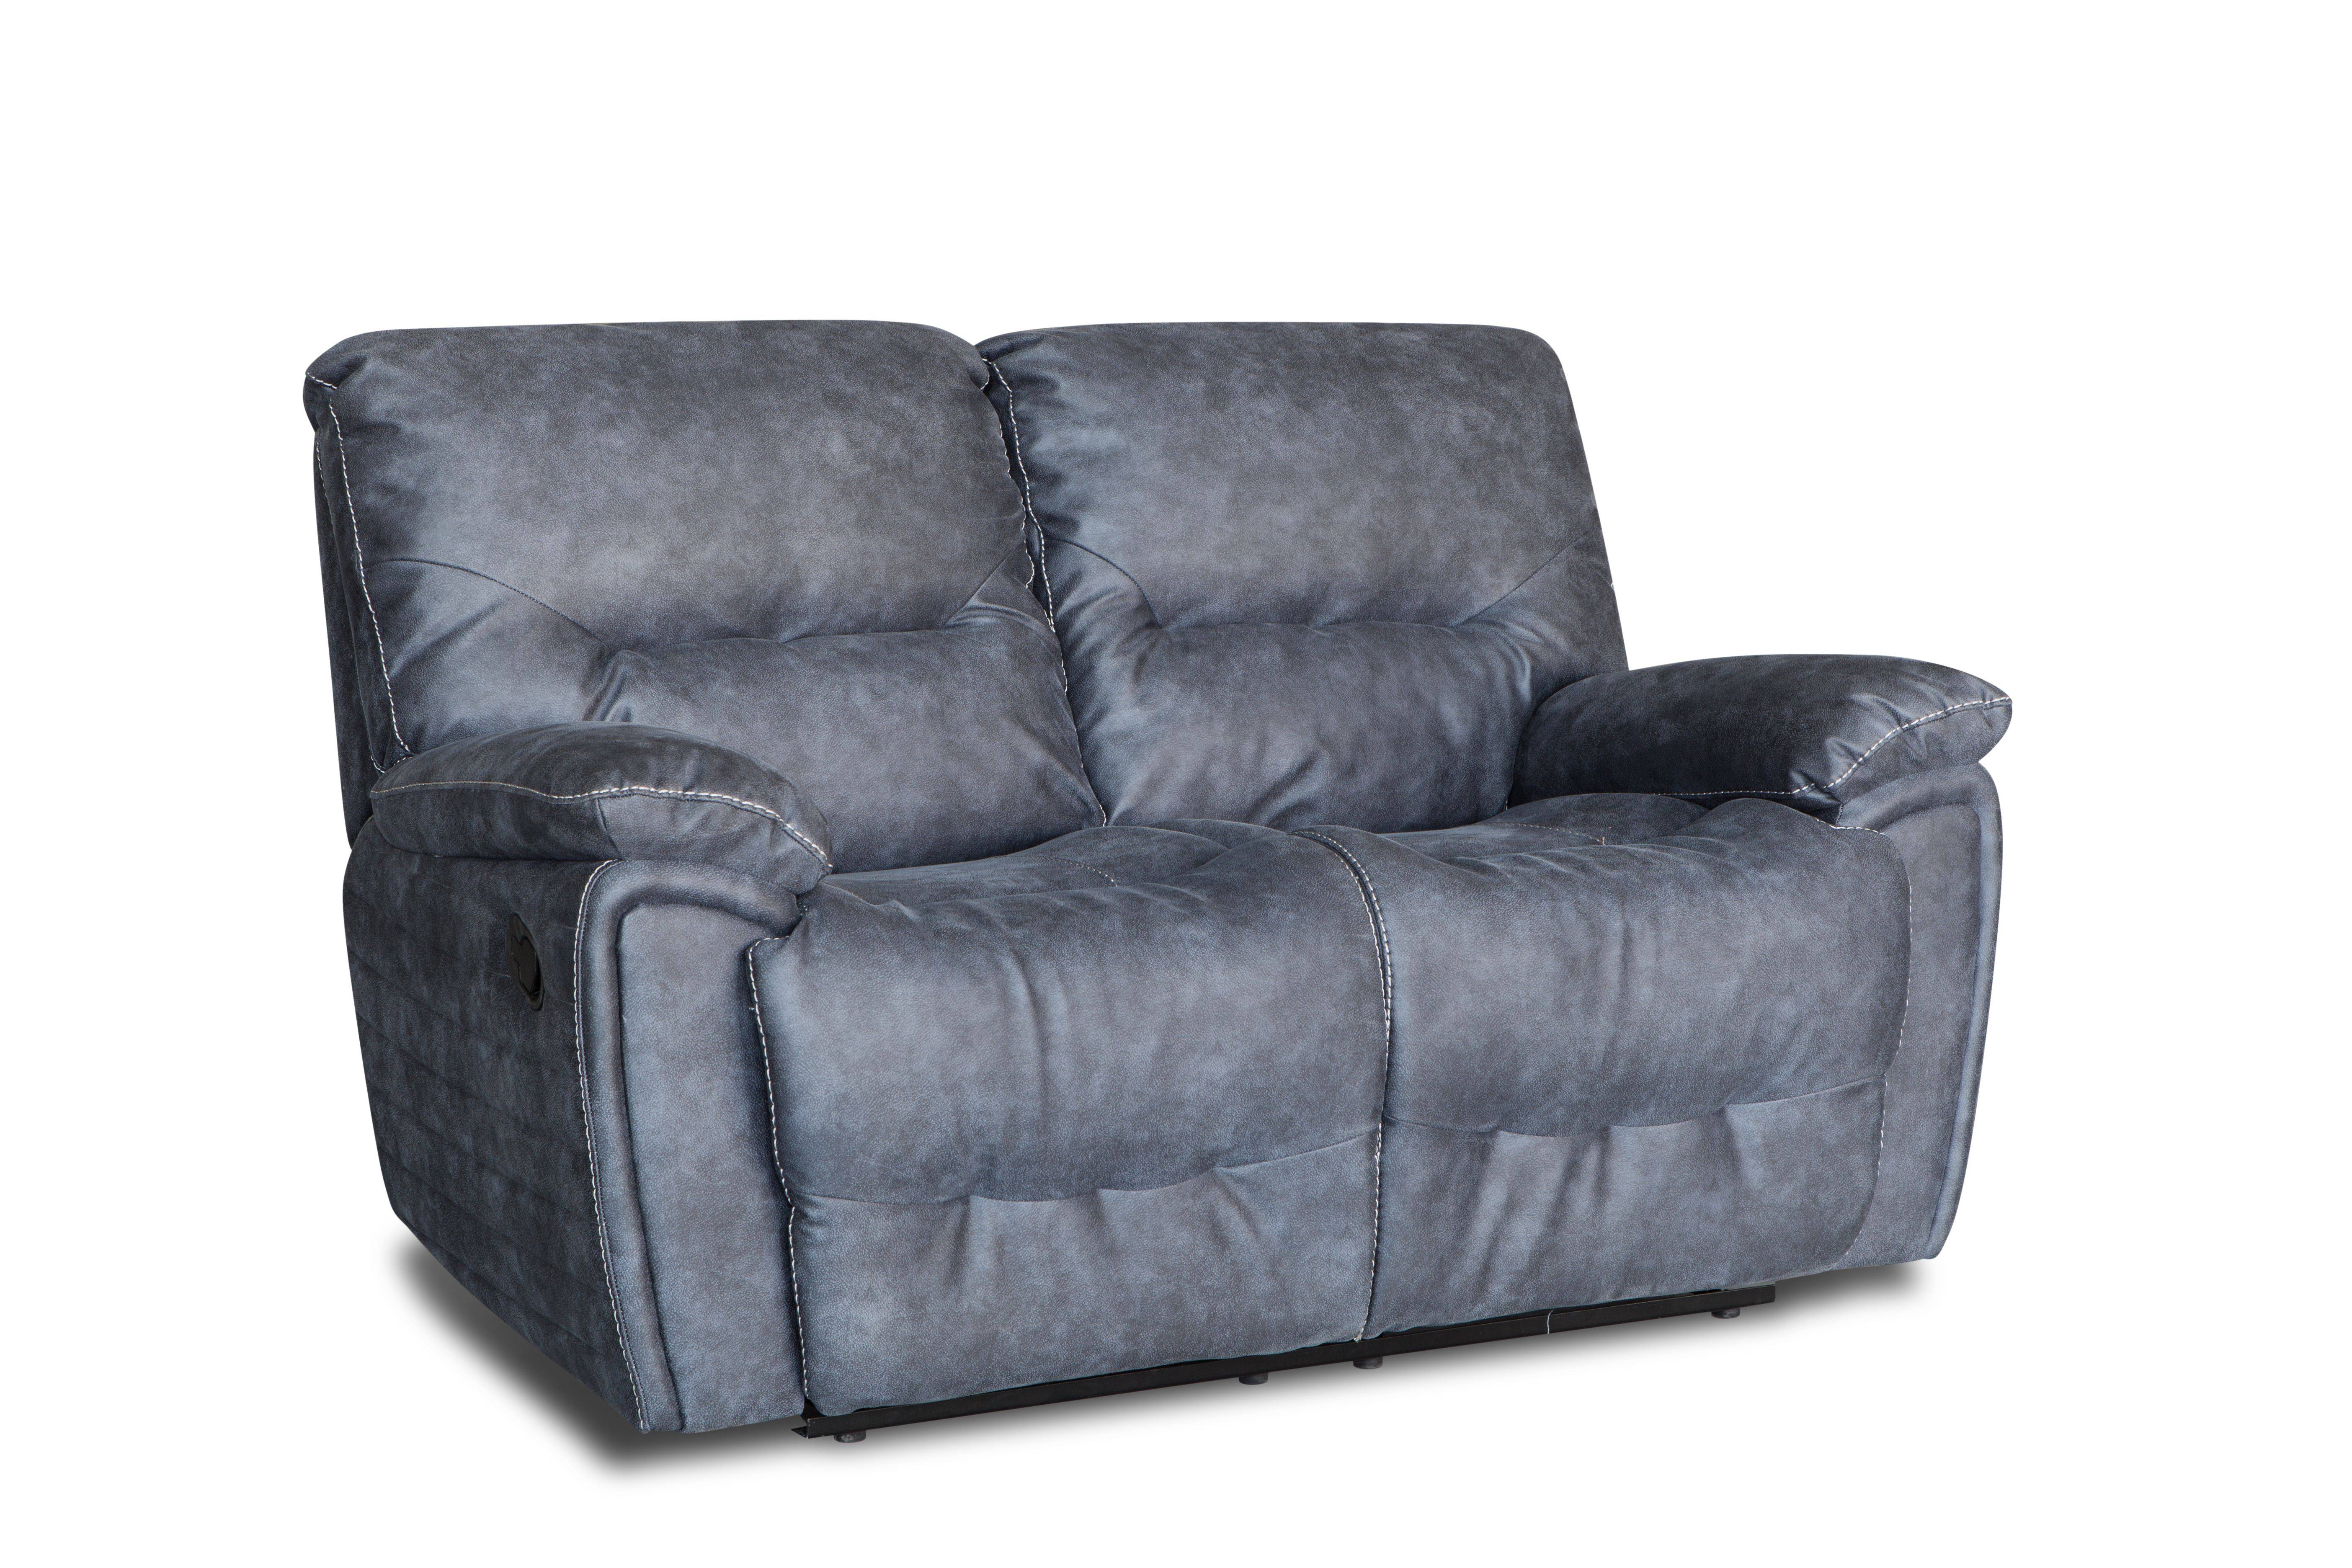 High quality durable and soft sofa living room set grey sectional sofa